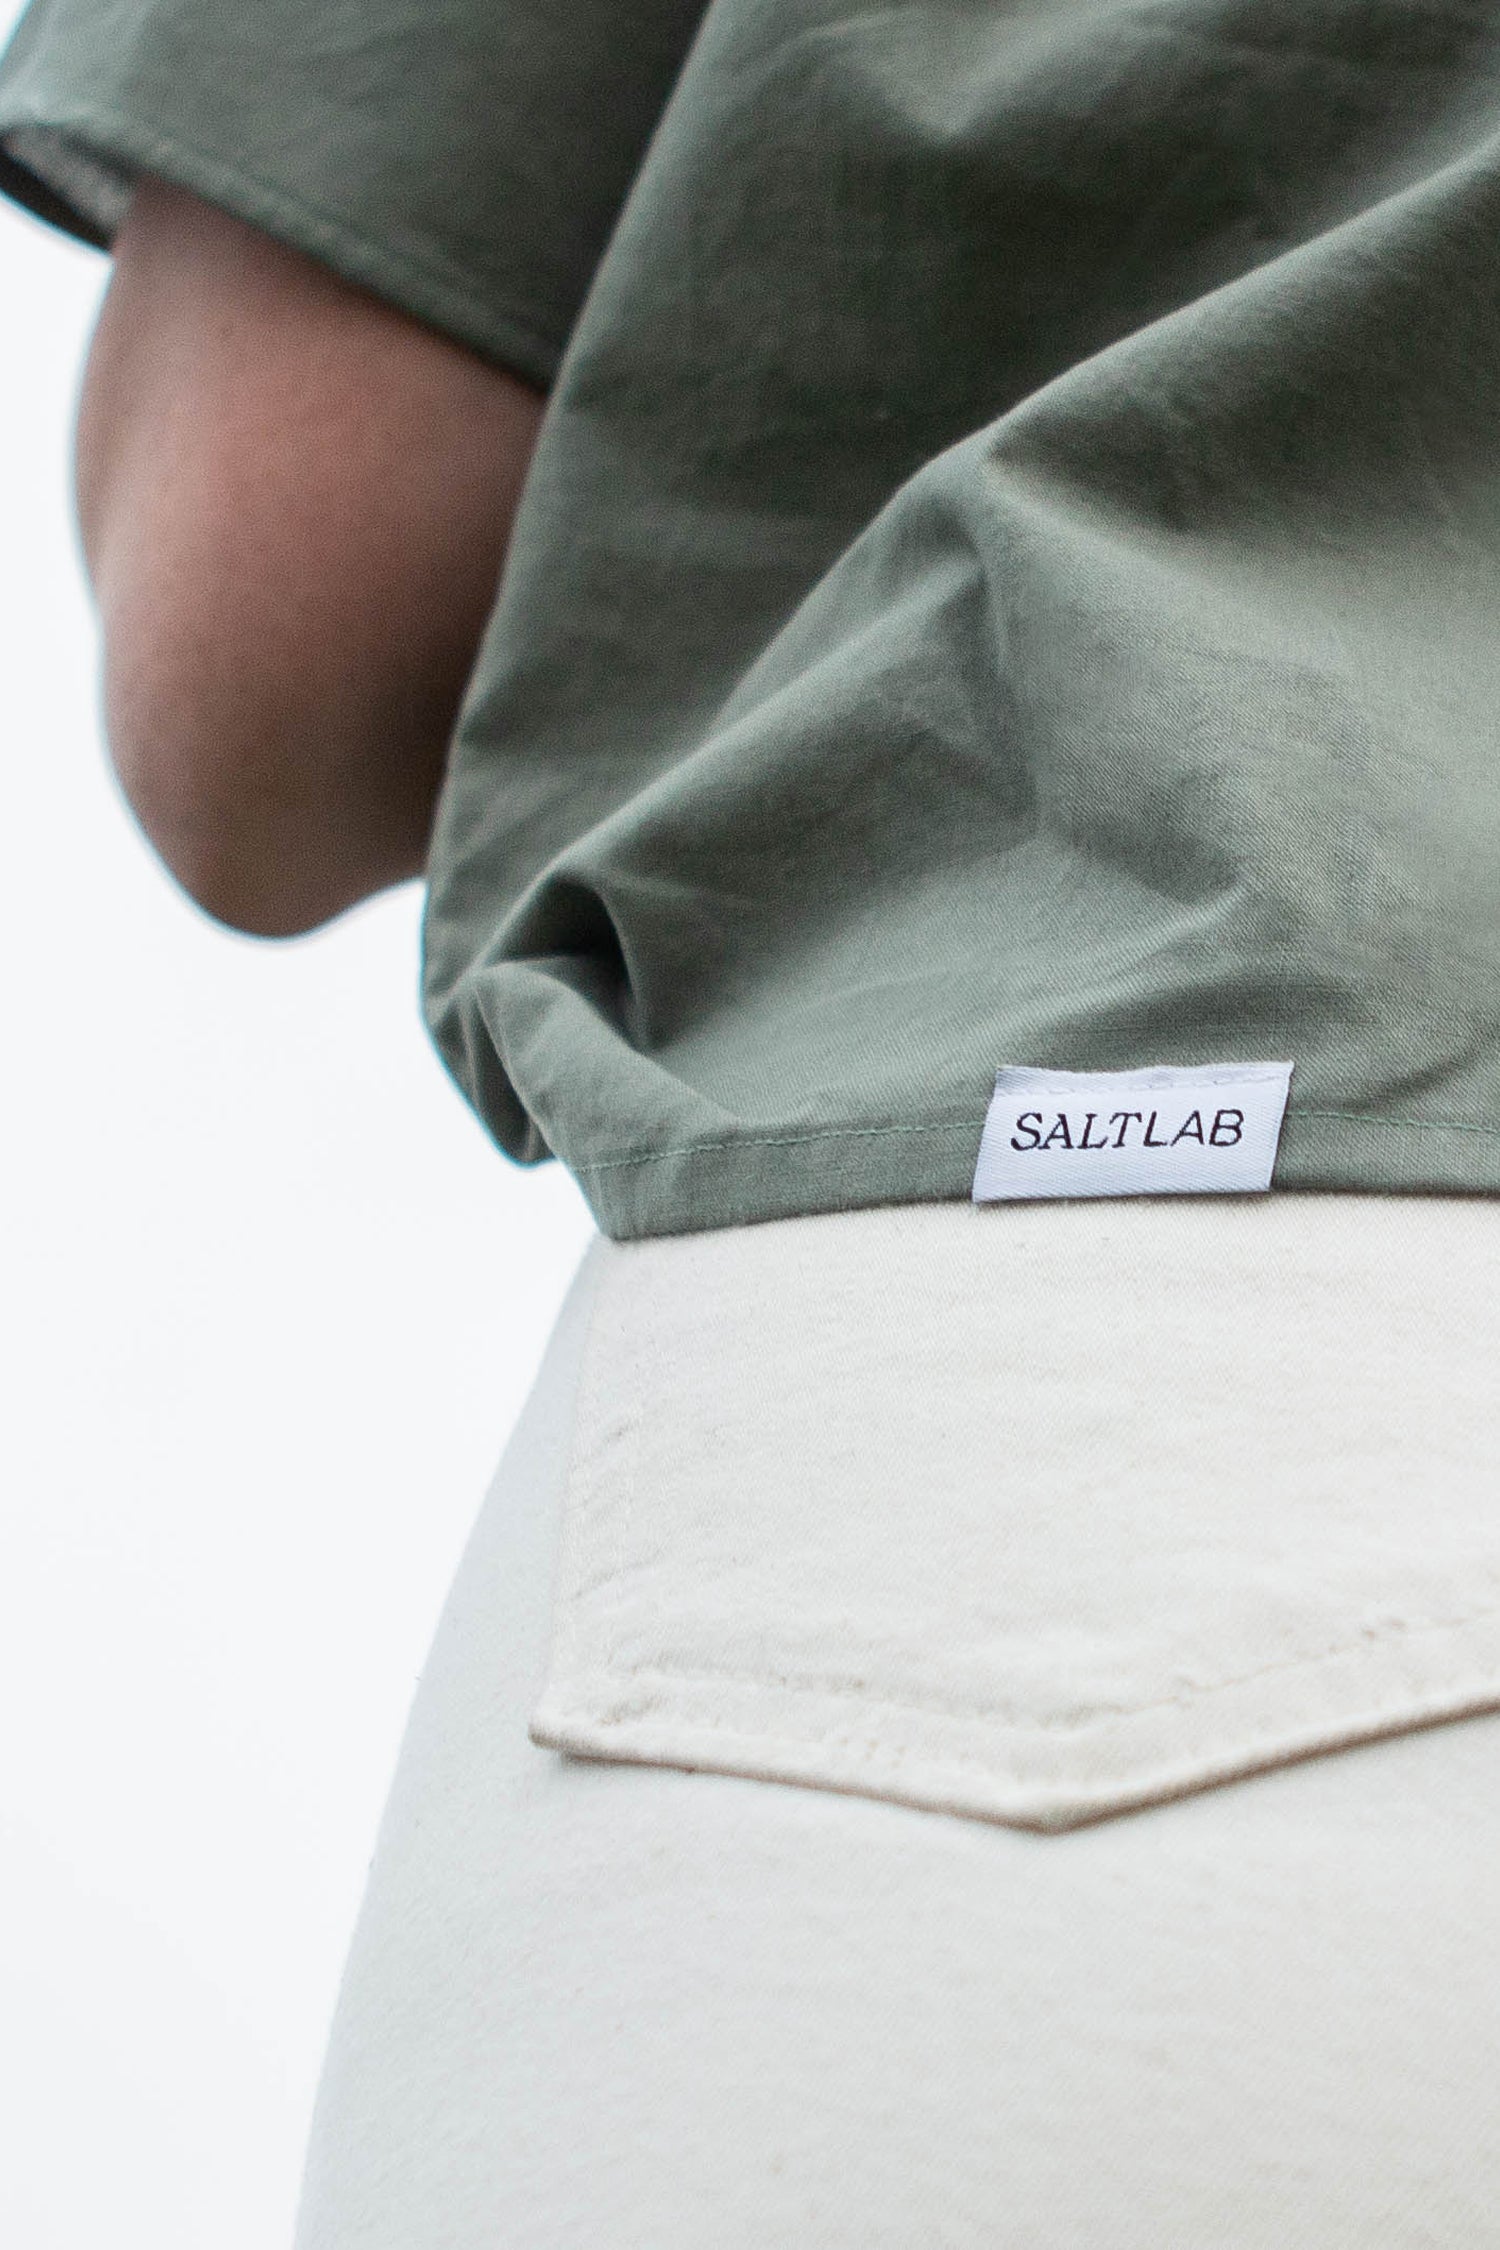 SALTLAB ARCHIVE SALE architect shirt in fresh sage